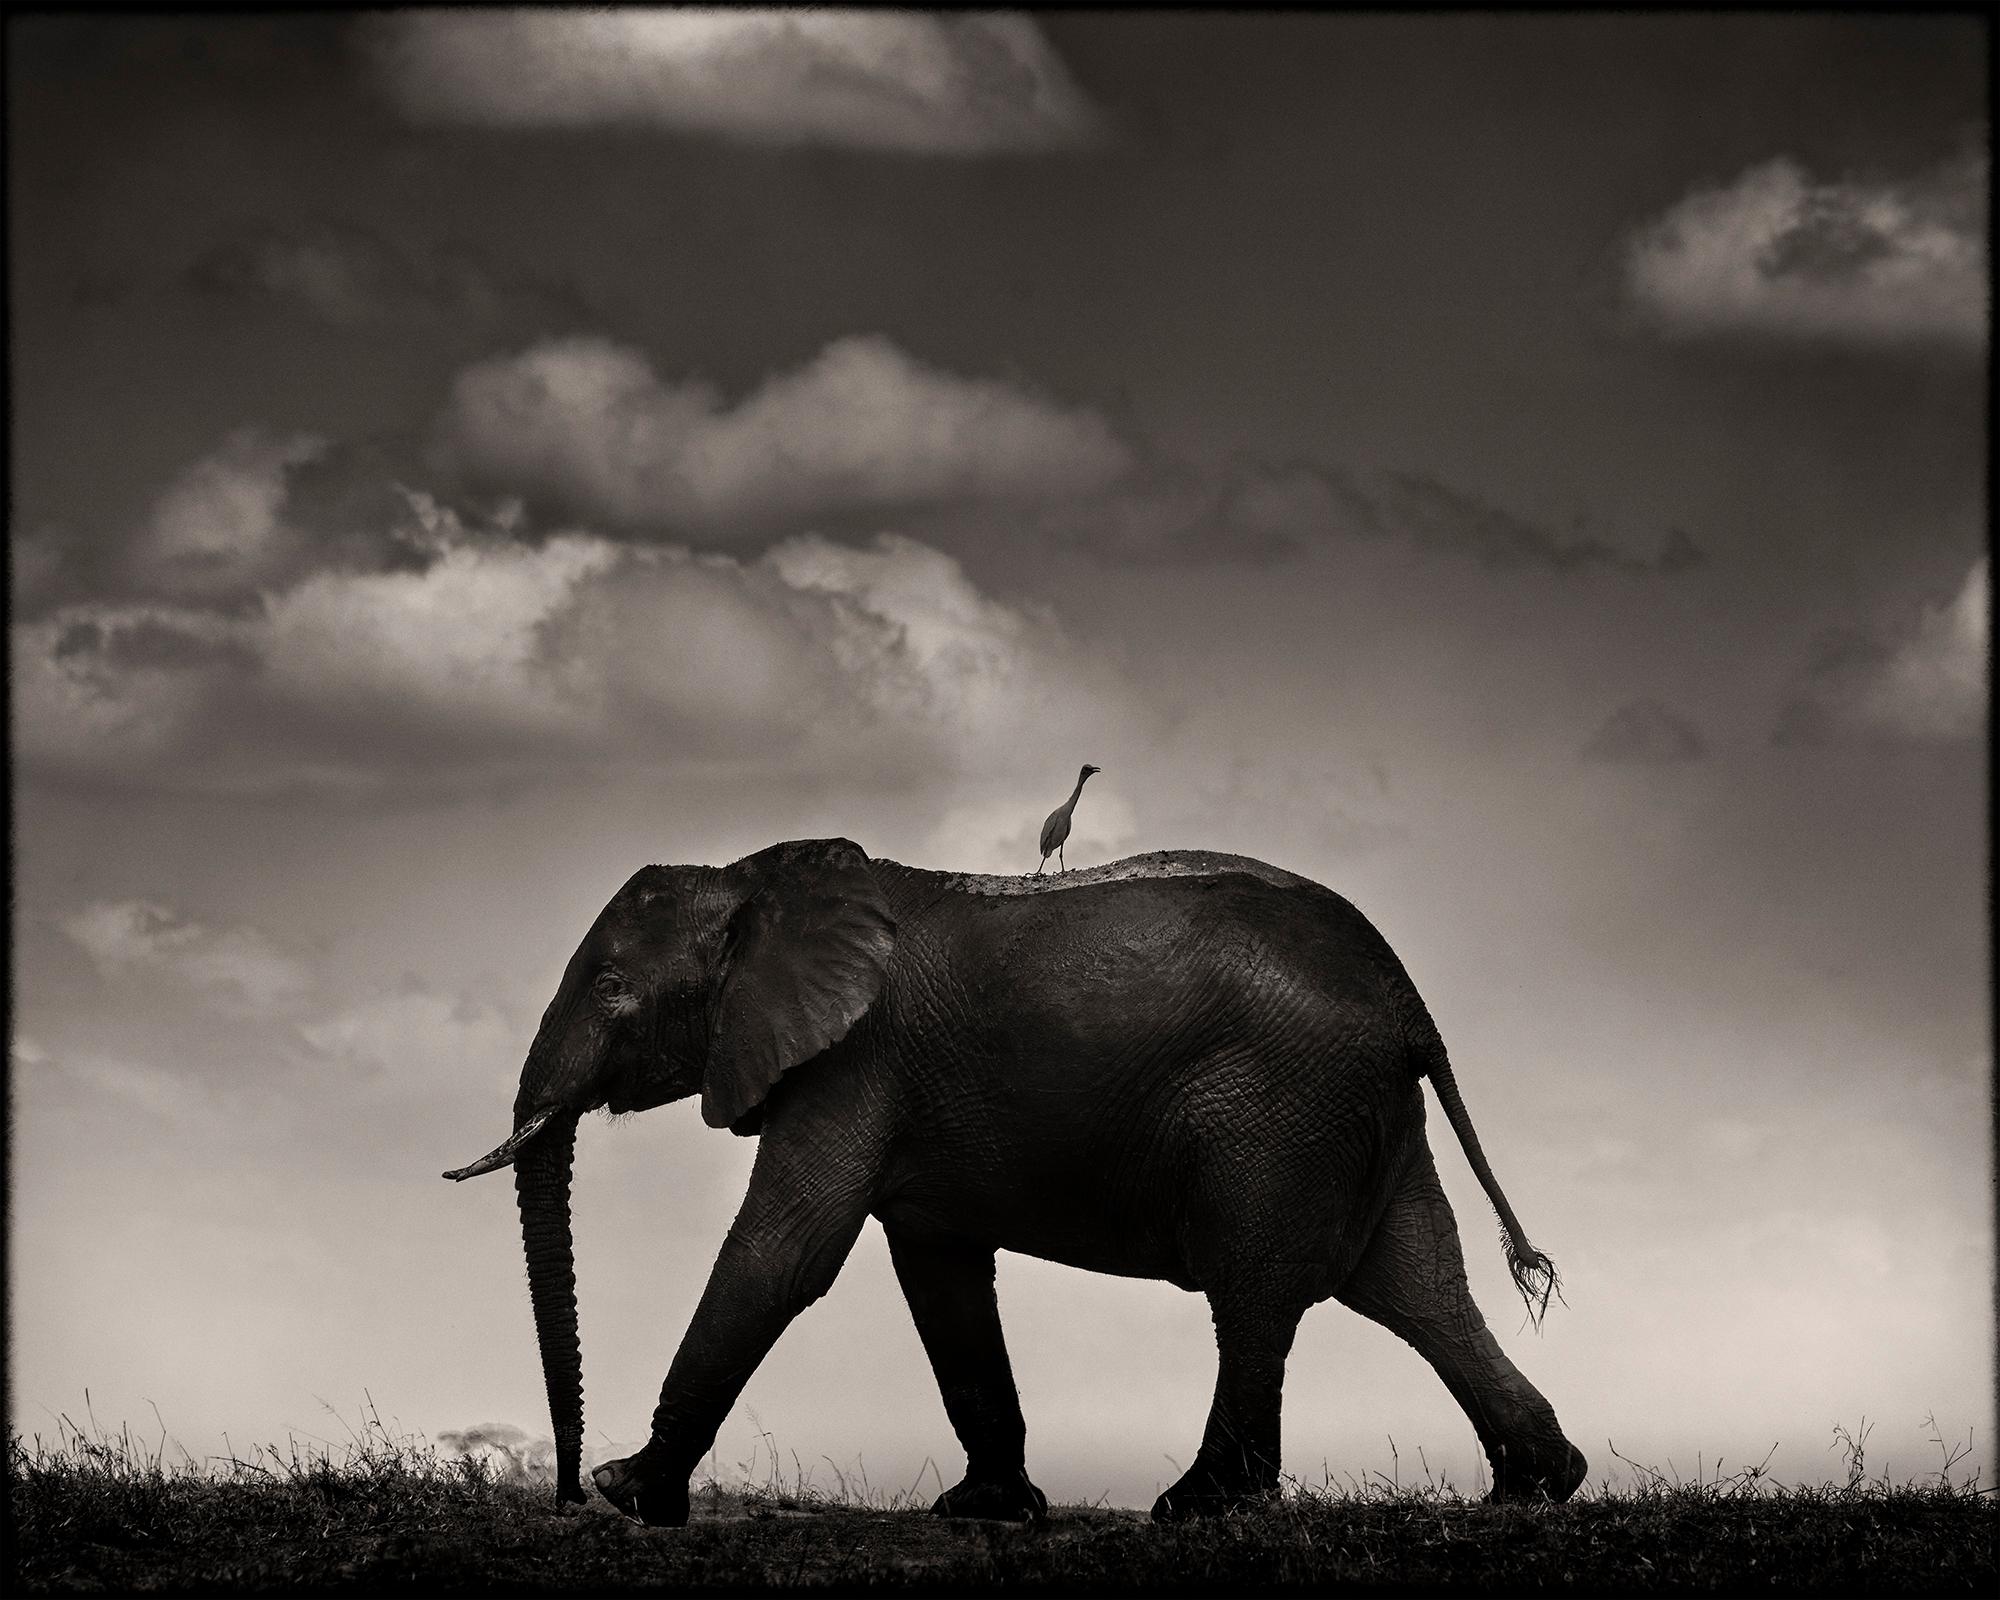 Joachim Schmeisser Portrait Photograph - Lone Rider, Kenya, Elephant, animal, wildlife, black and white photography